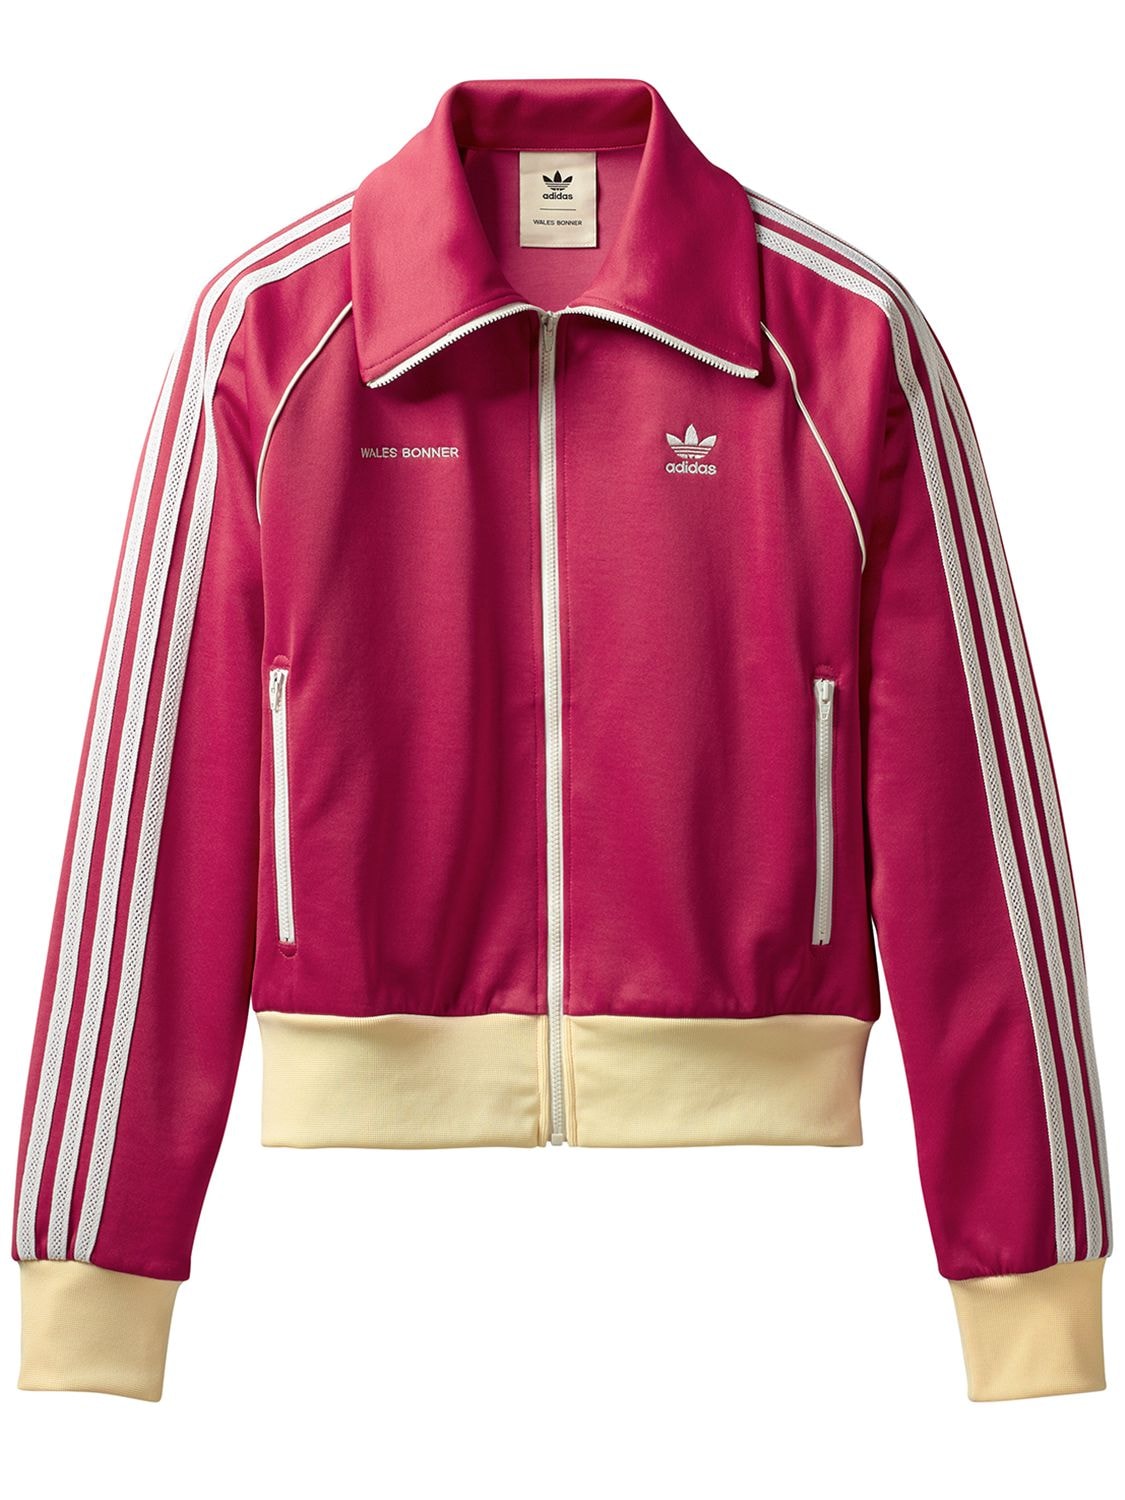 Adidas Originals Statement Wales Bonner 70'2 Track Top In Rave Pink